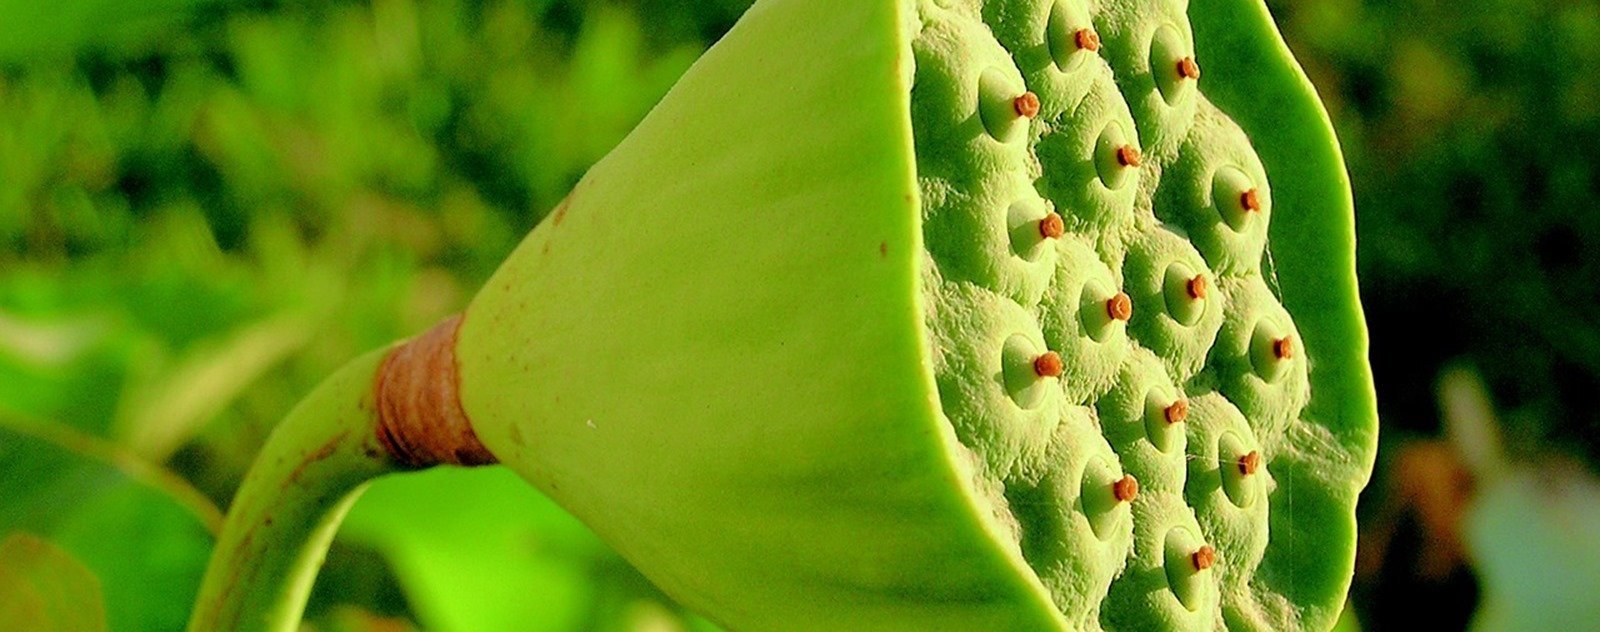 feuilles terre version graine de lotus